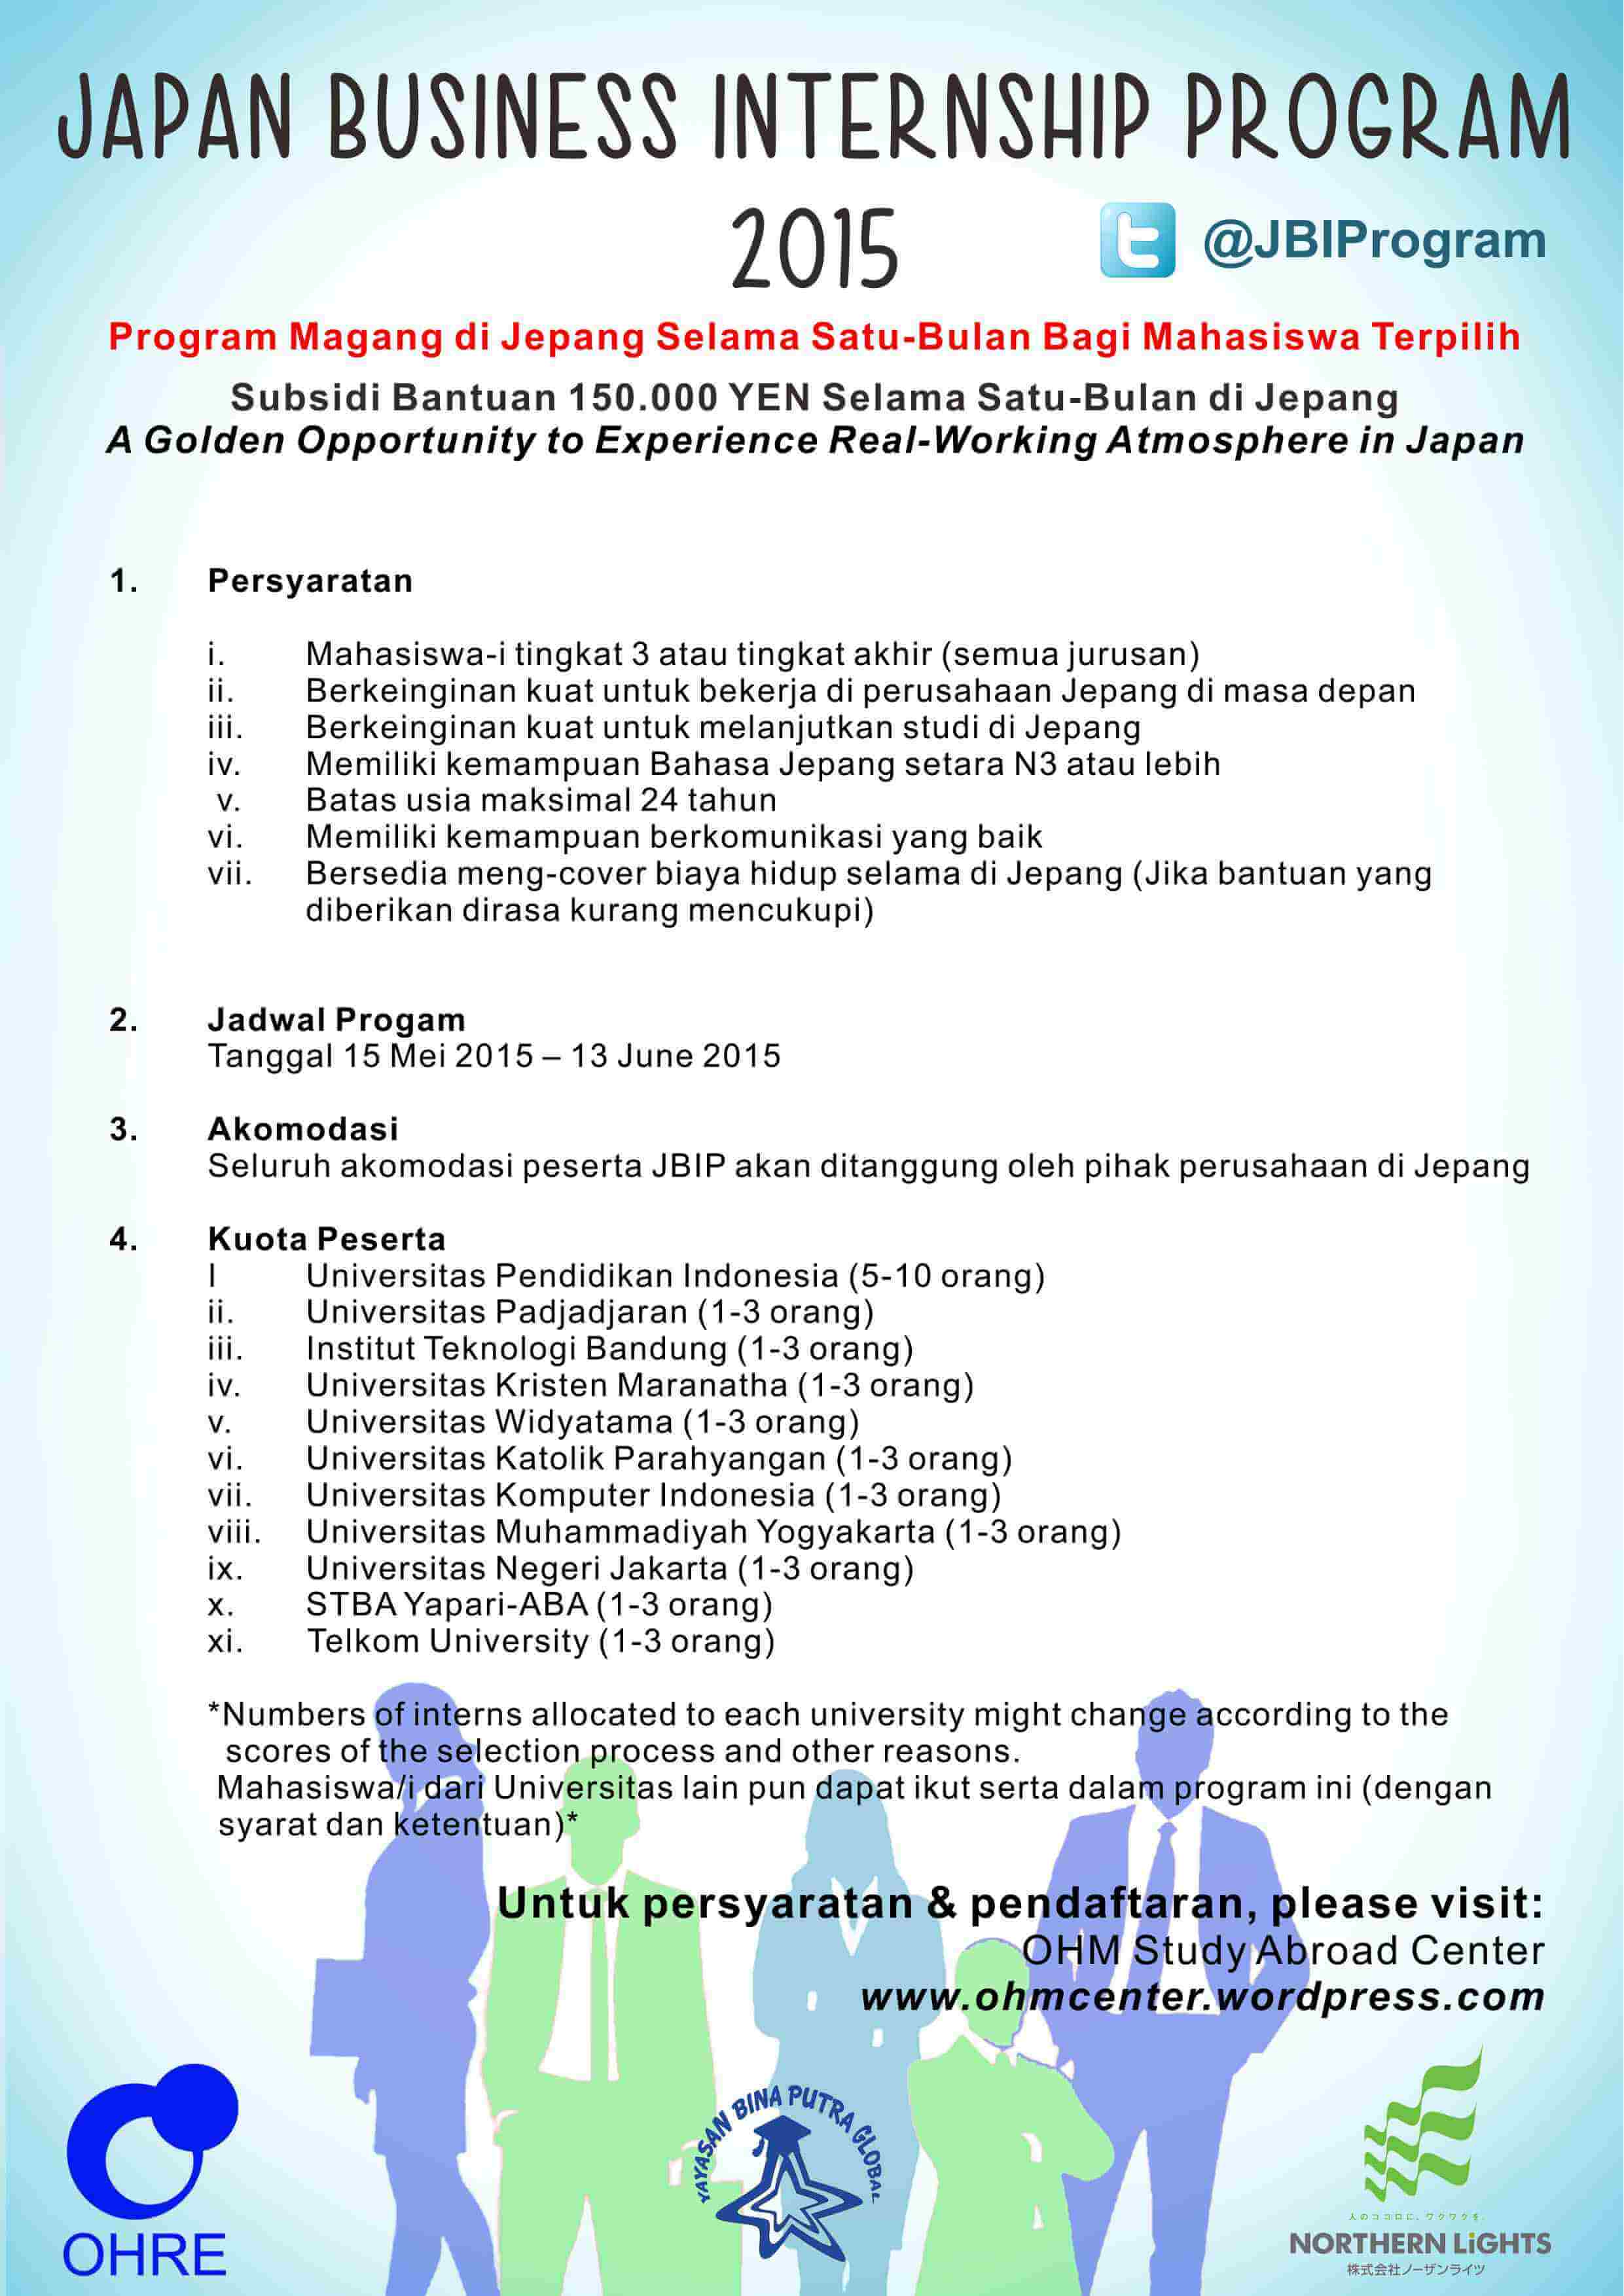 December 1 2014 JAPAN BUSINESS INTERNSHIP PROGRAM JBIP 2015